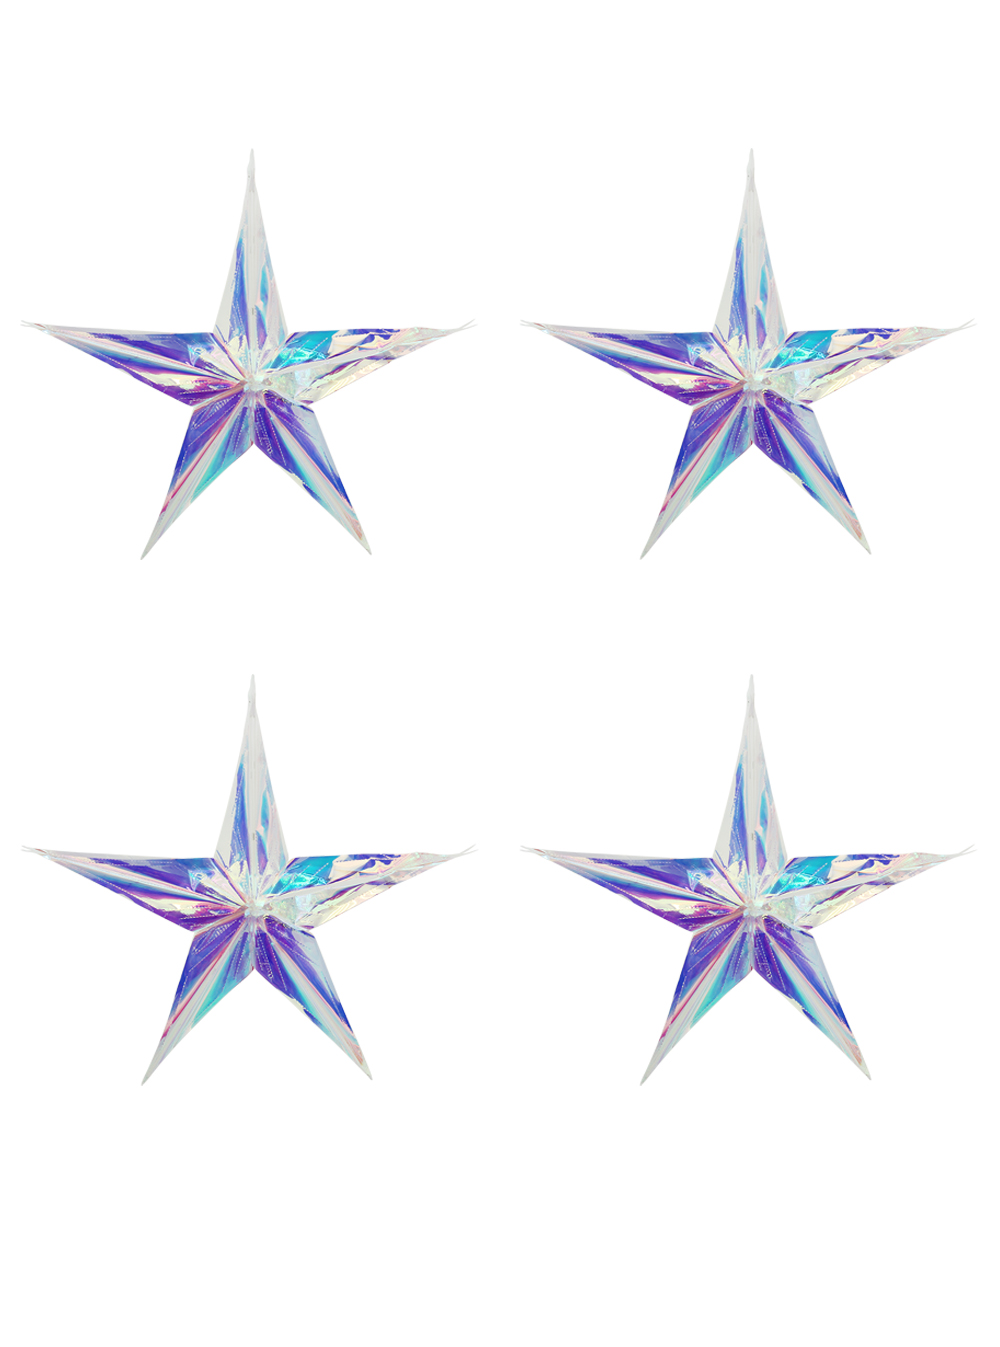 5 Point Iridescent Star (Pollyanna)